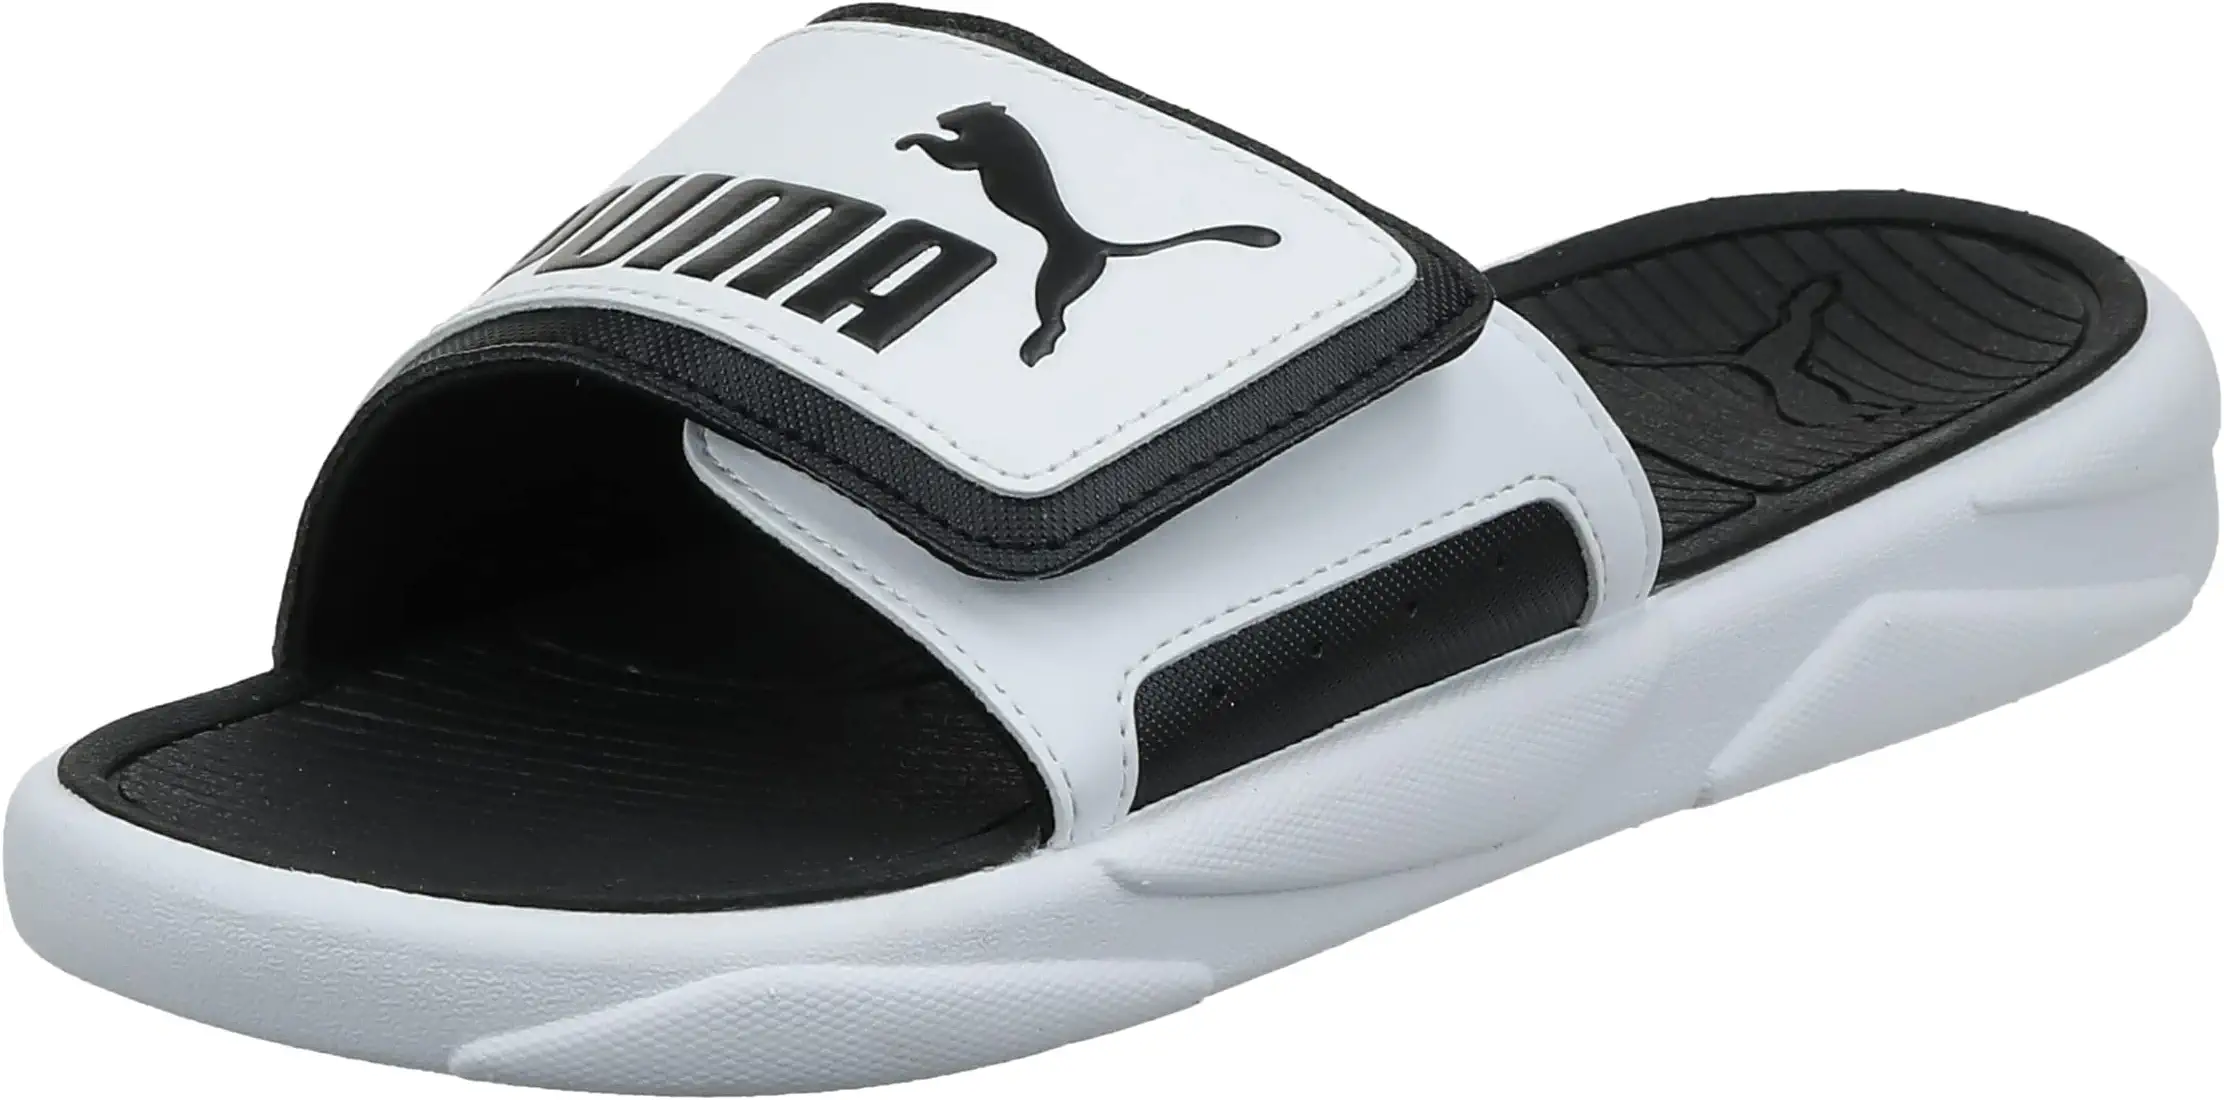 Puma unisex-adult Royalcat Comfort Sandals Slide Sandal